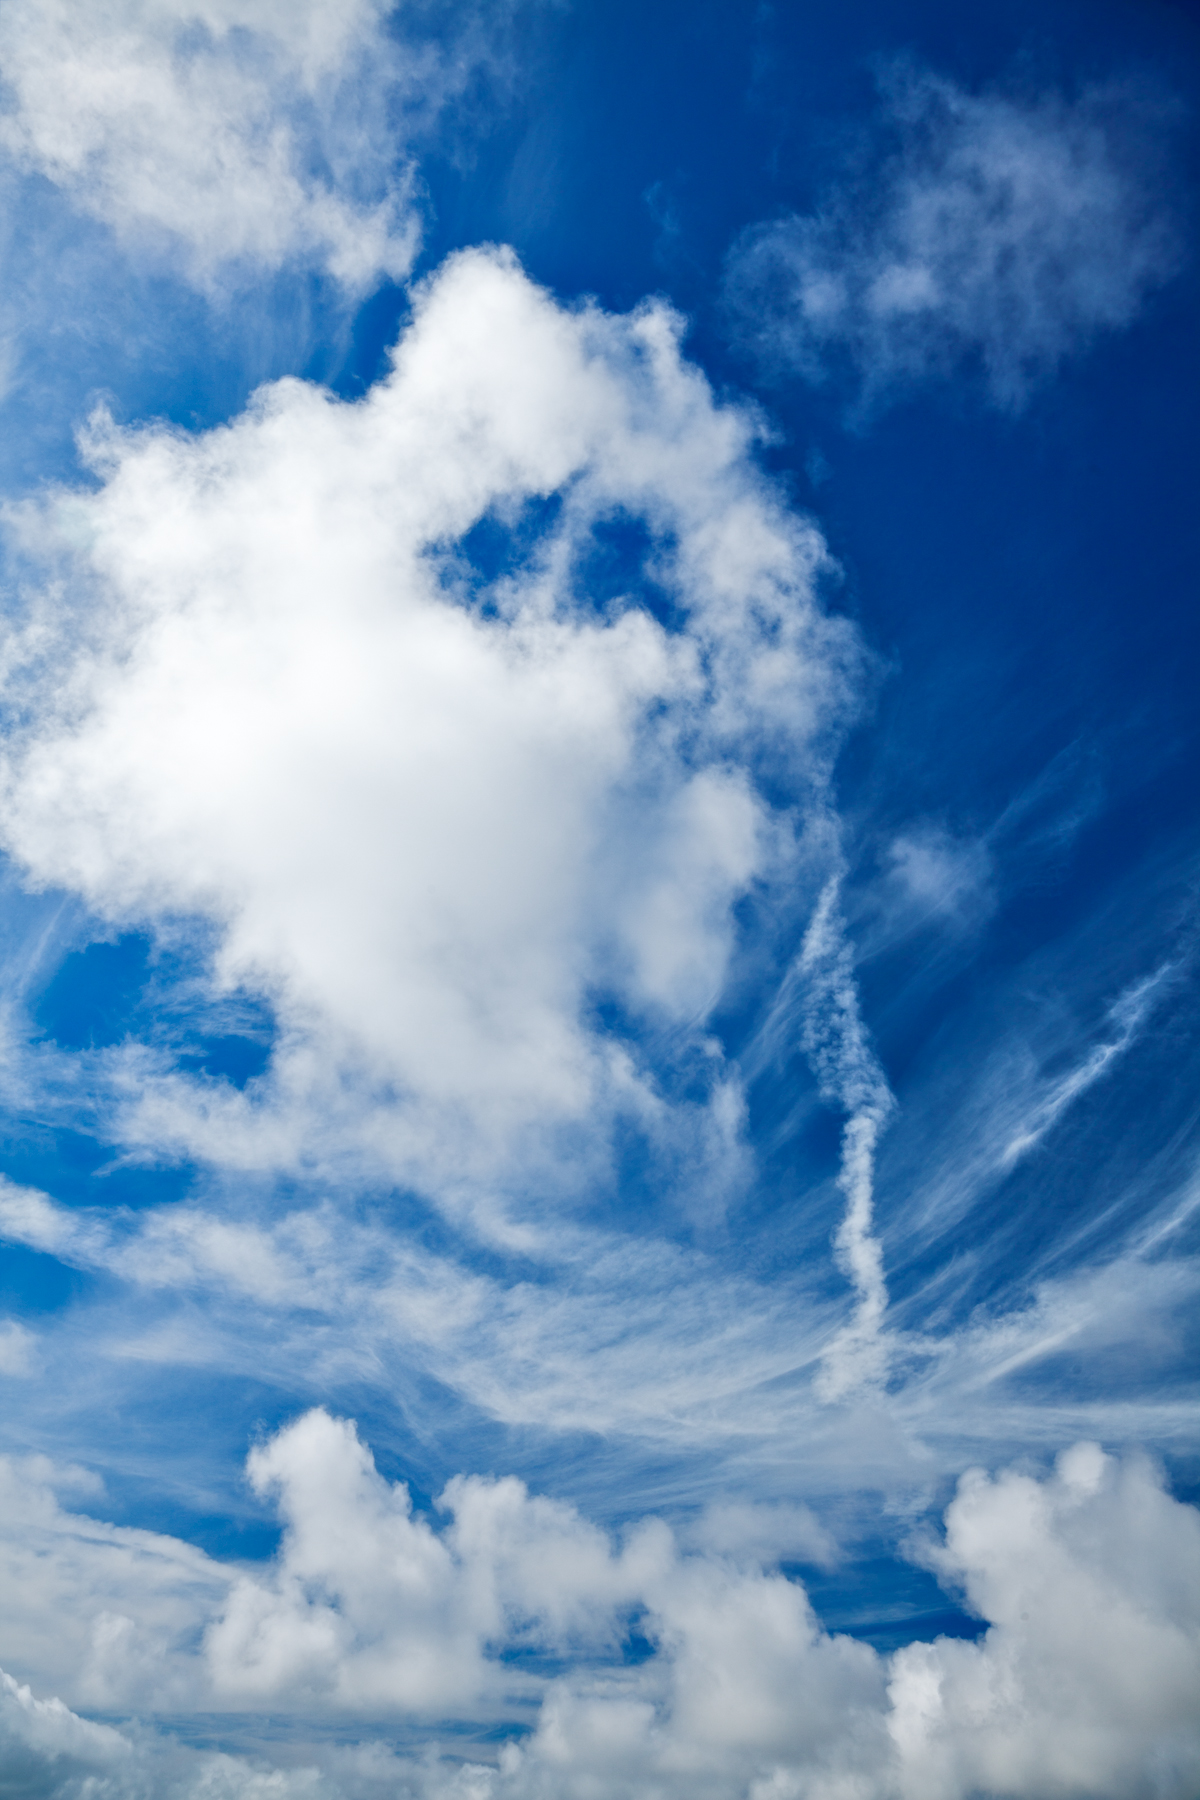 Cloudy Blue Sky, Backdrop, Somadjinn, Resource, Scape, HQ Photo